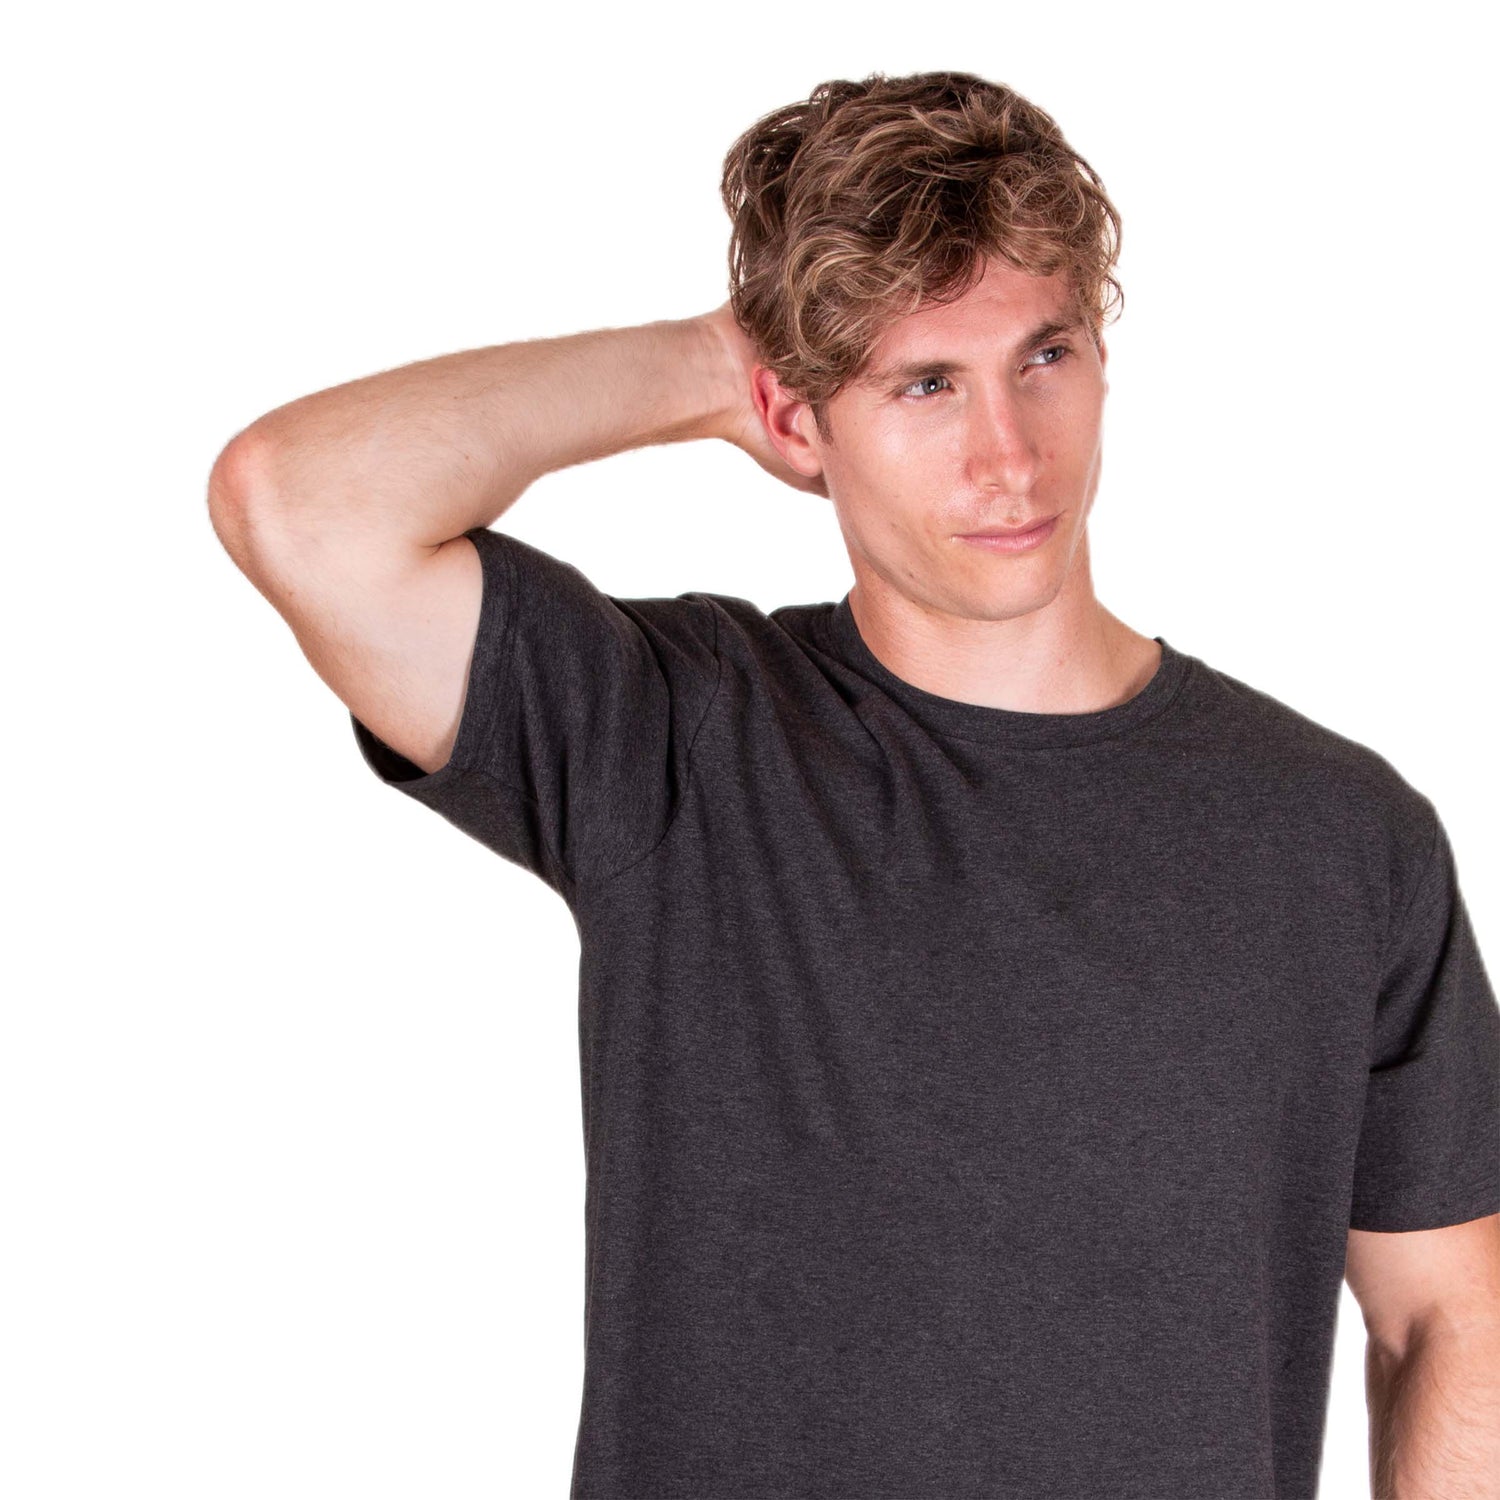 grey sweatproof t-shirt man arm behind head showing armpit